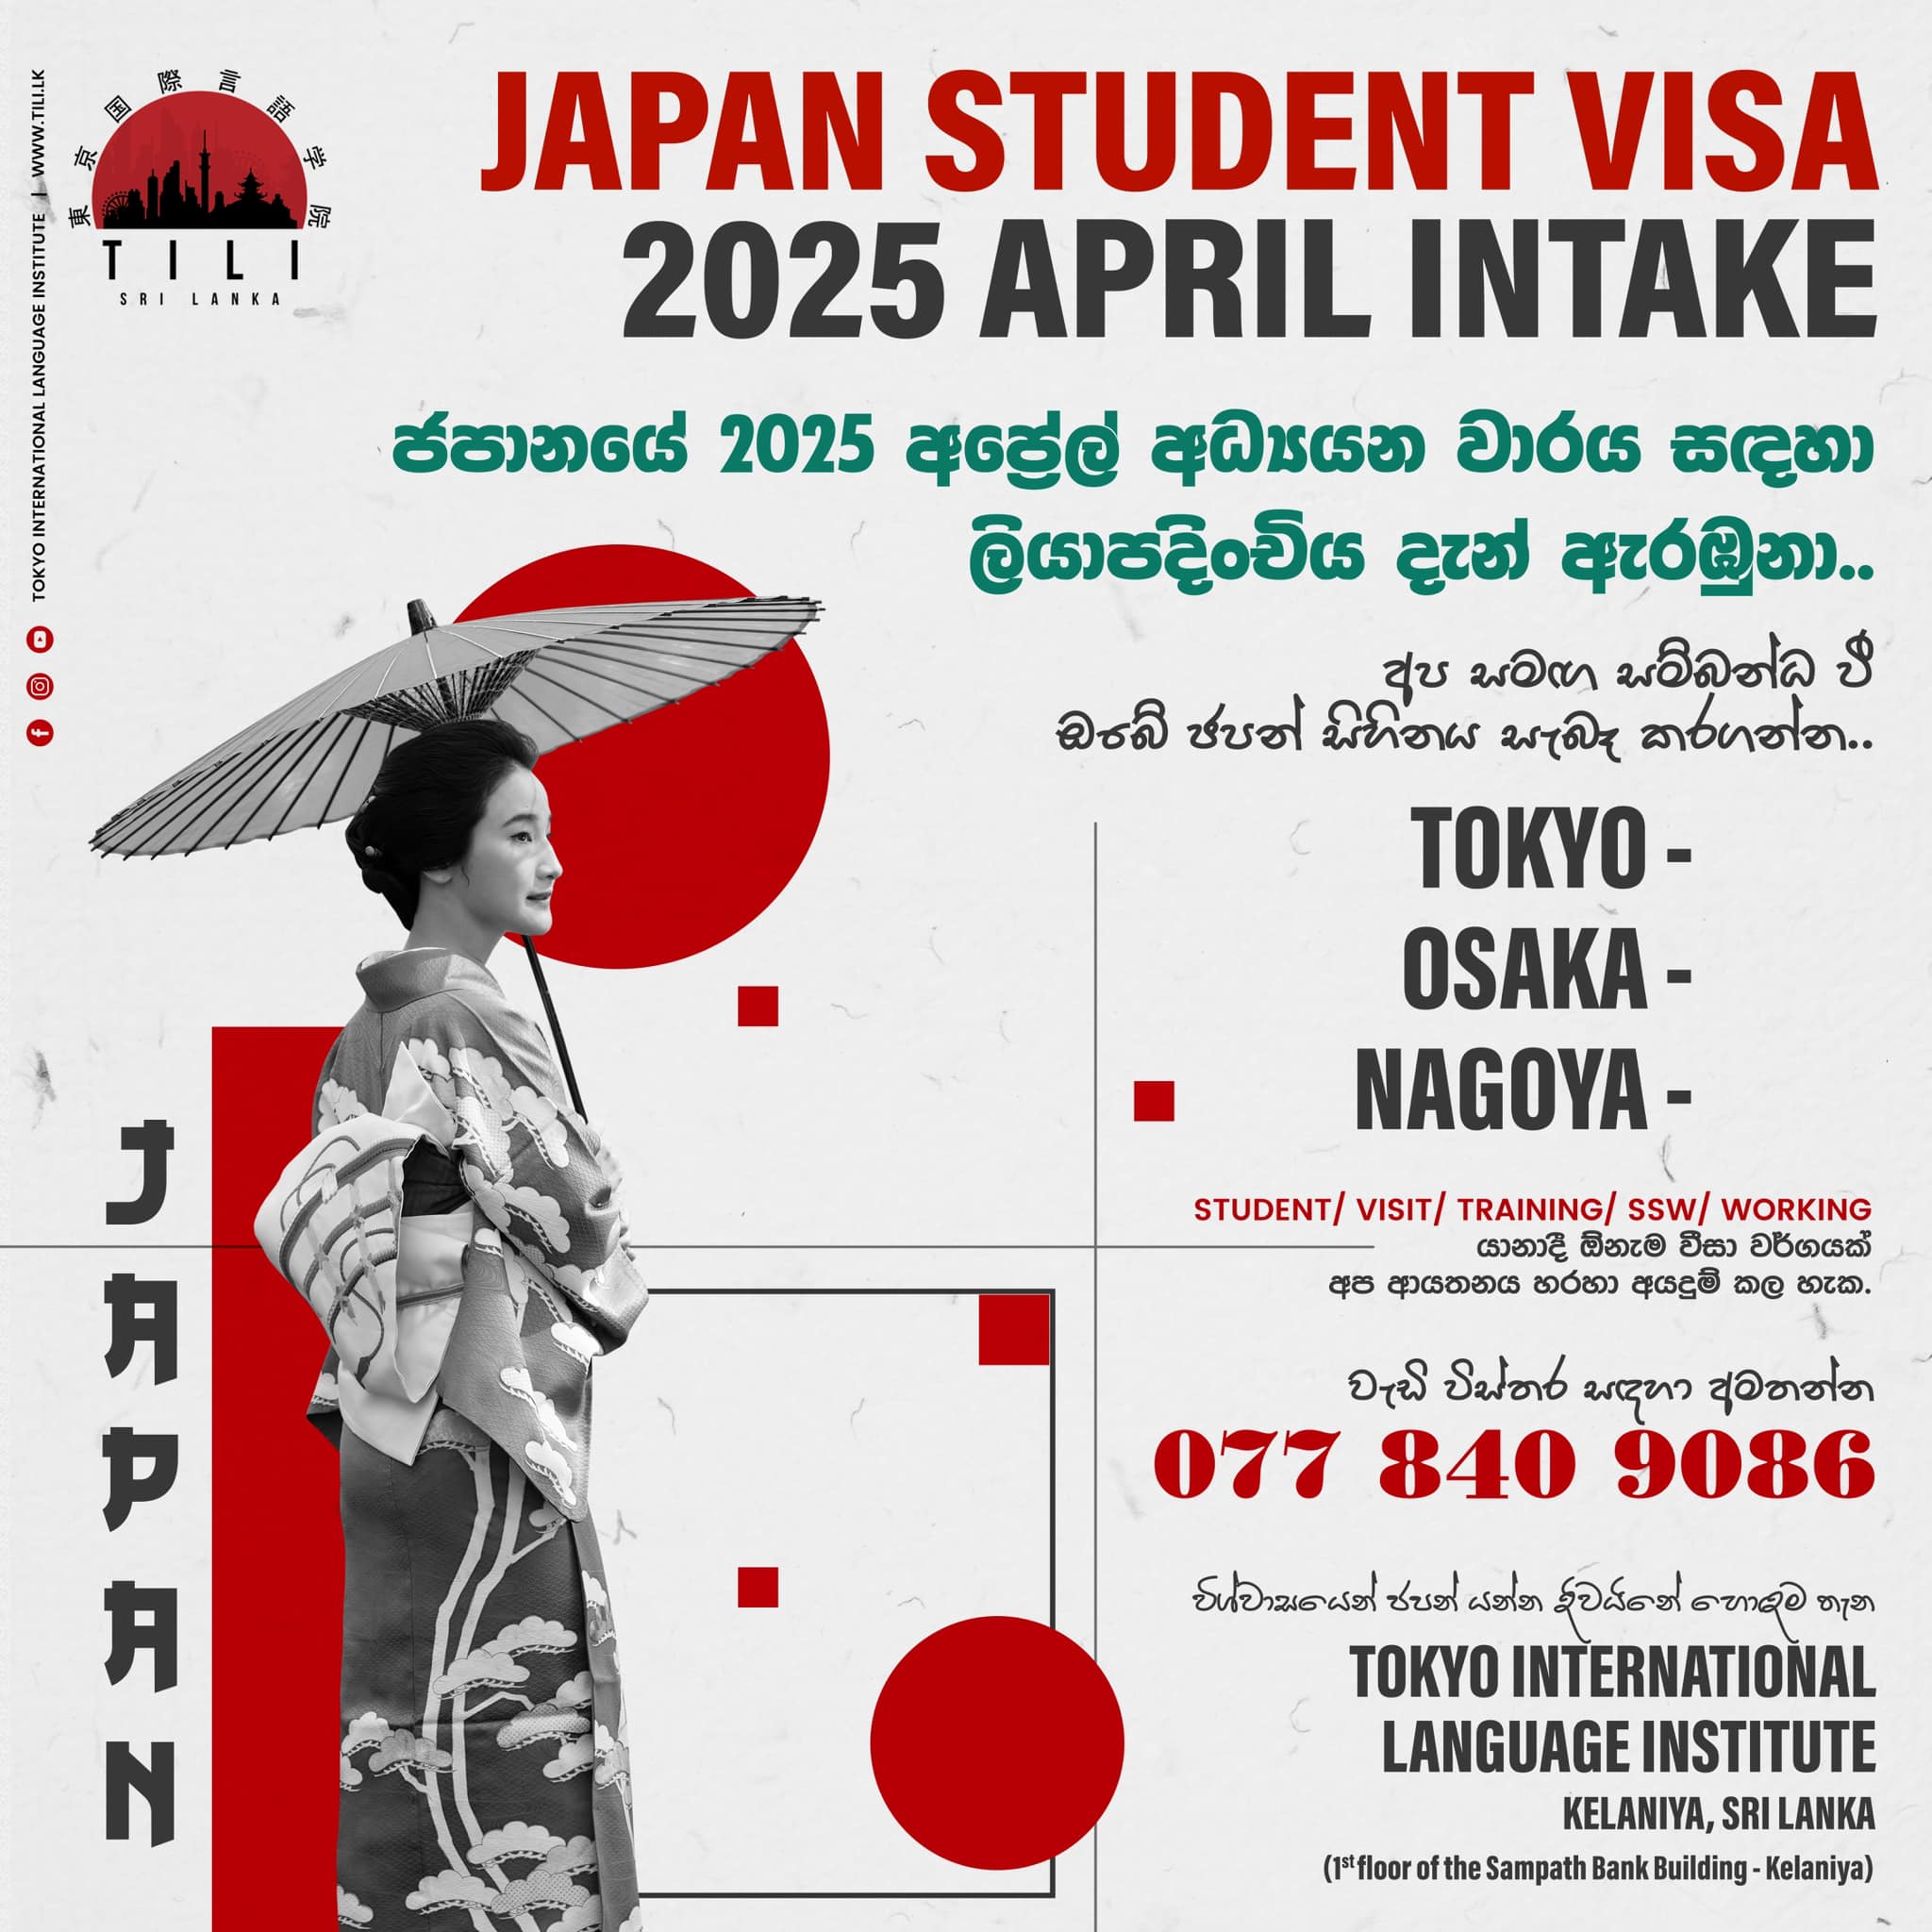 JAPAN STUDENT VISA 2025 APRIL INTAKE image 103